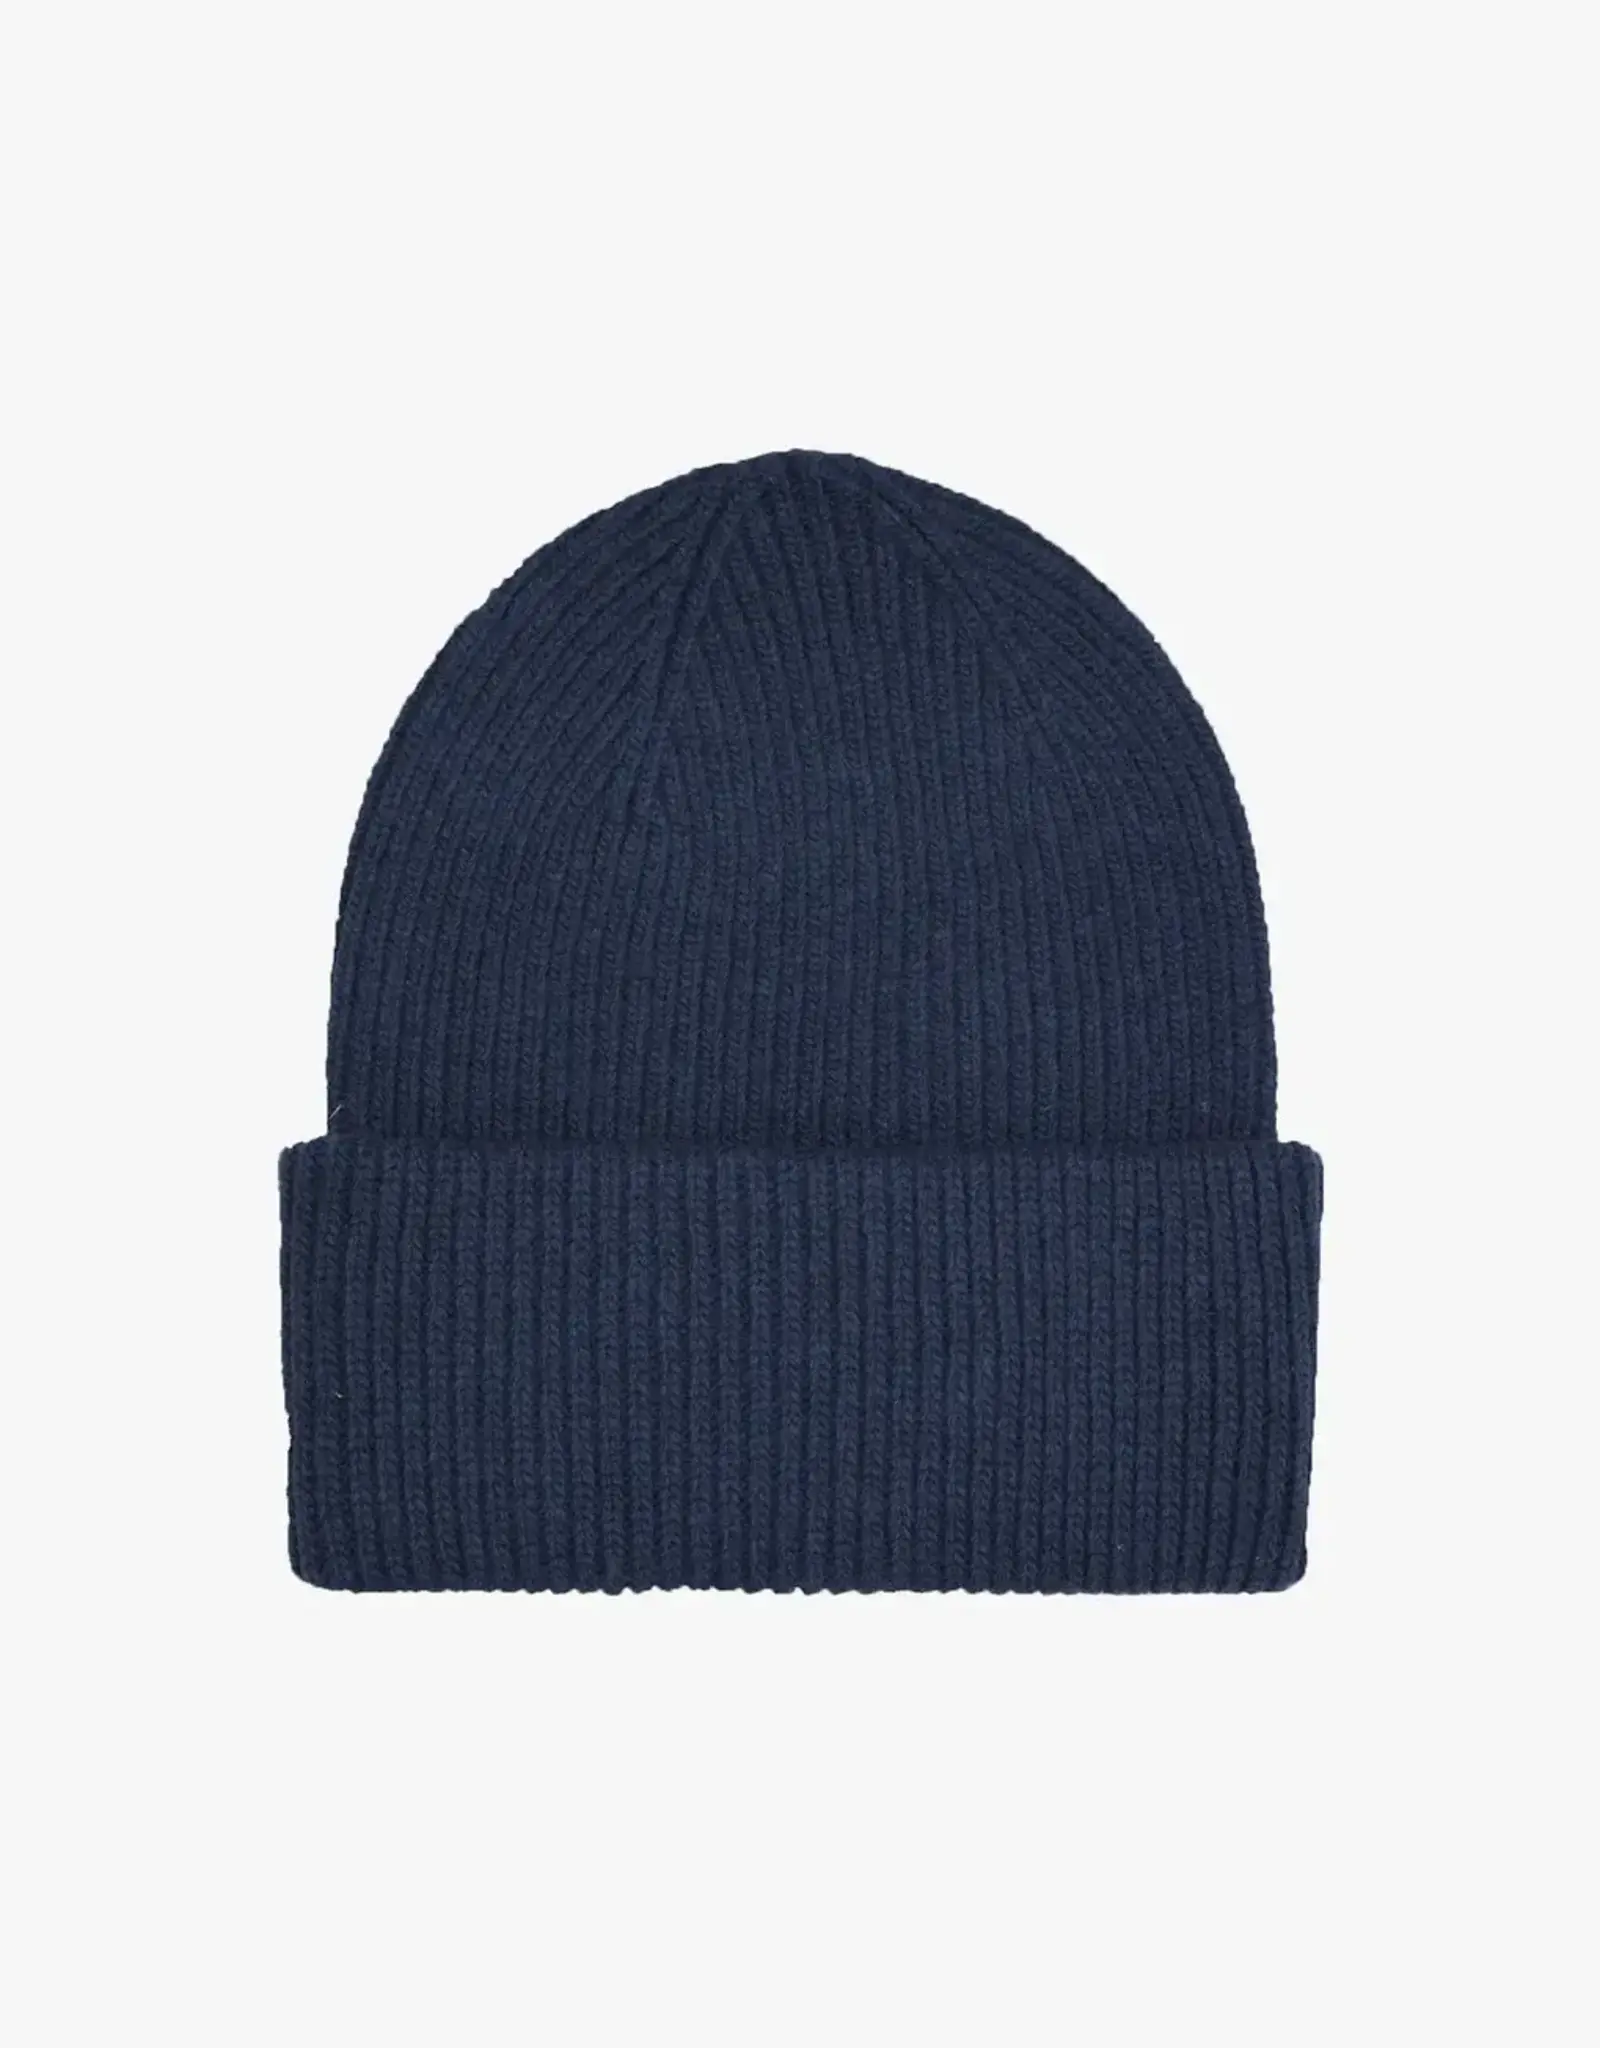 Colorful Standard Hat 'Merino Wool' - Navy Blue - Colorful Standard